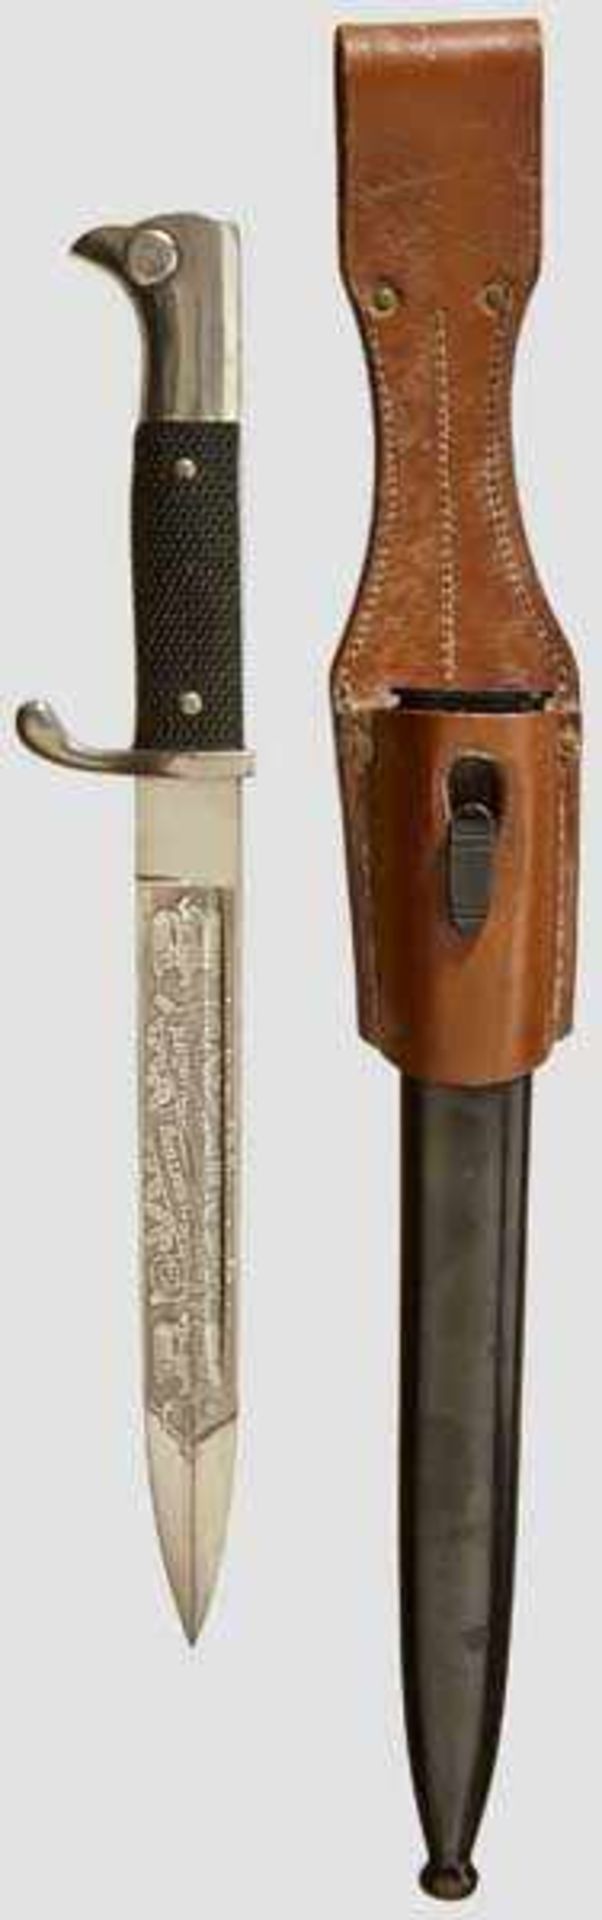 A Short KS98 Single Etched Dress Bayonet Maker Carl Eickhorn, Solingen. Length 35 cm. Nickel-